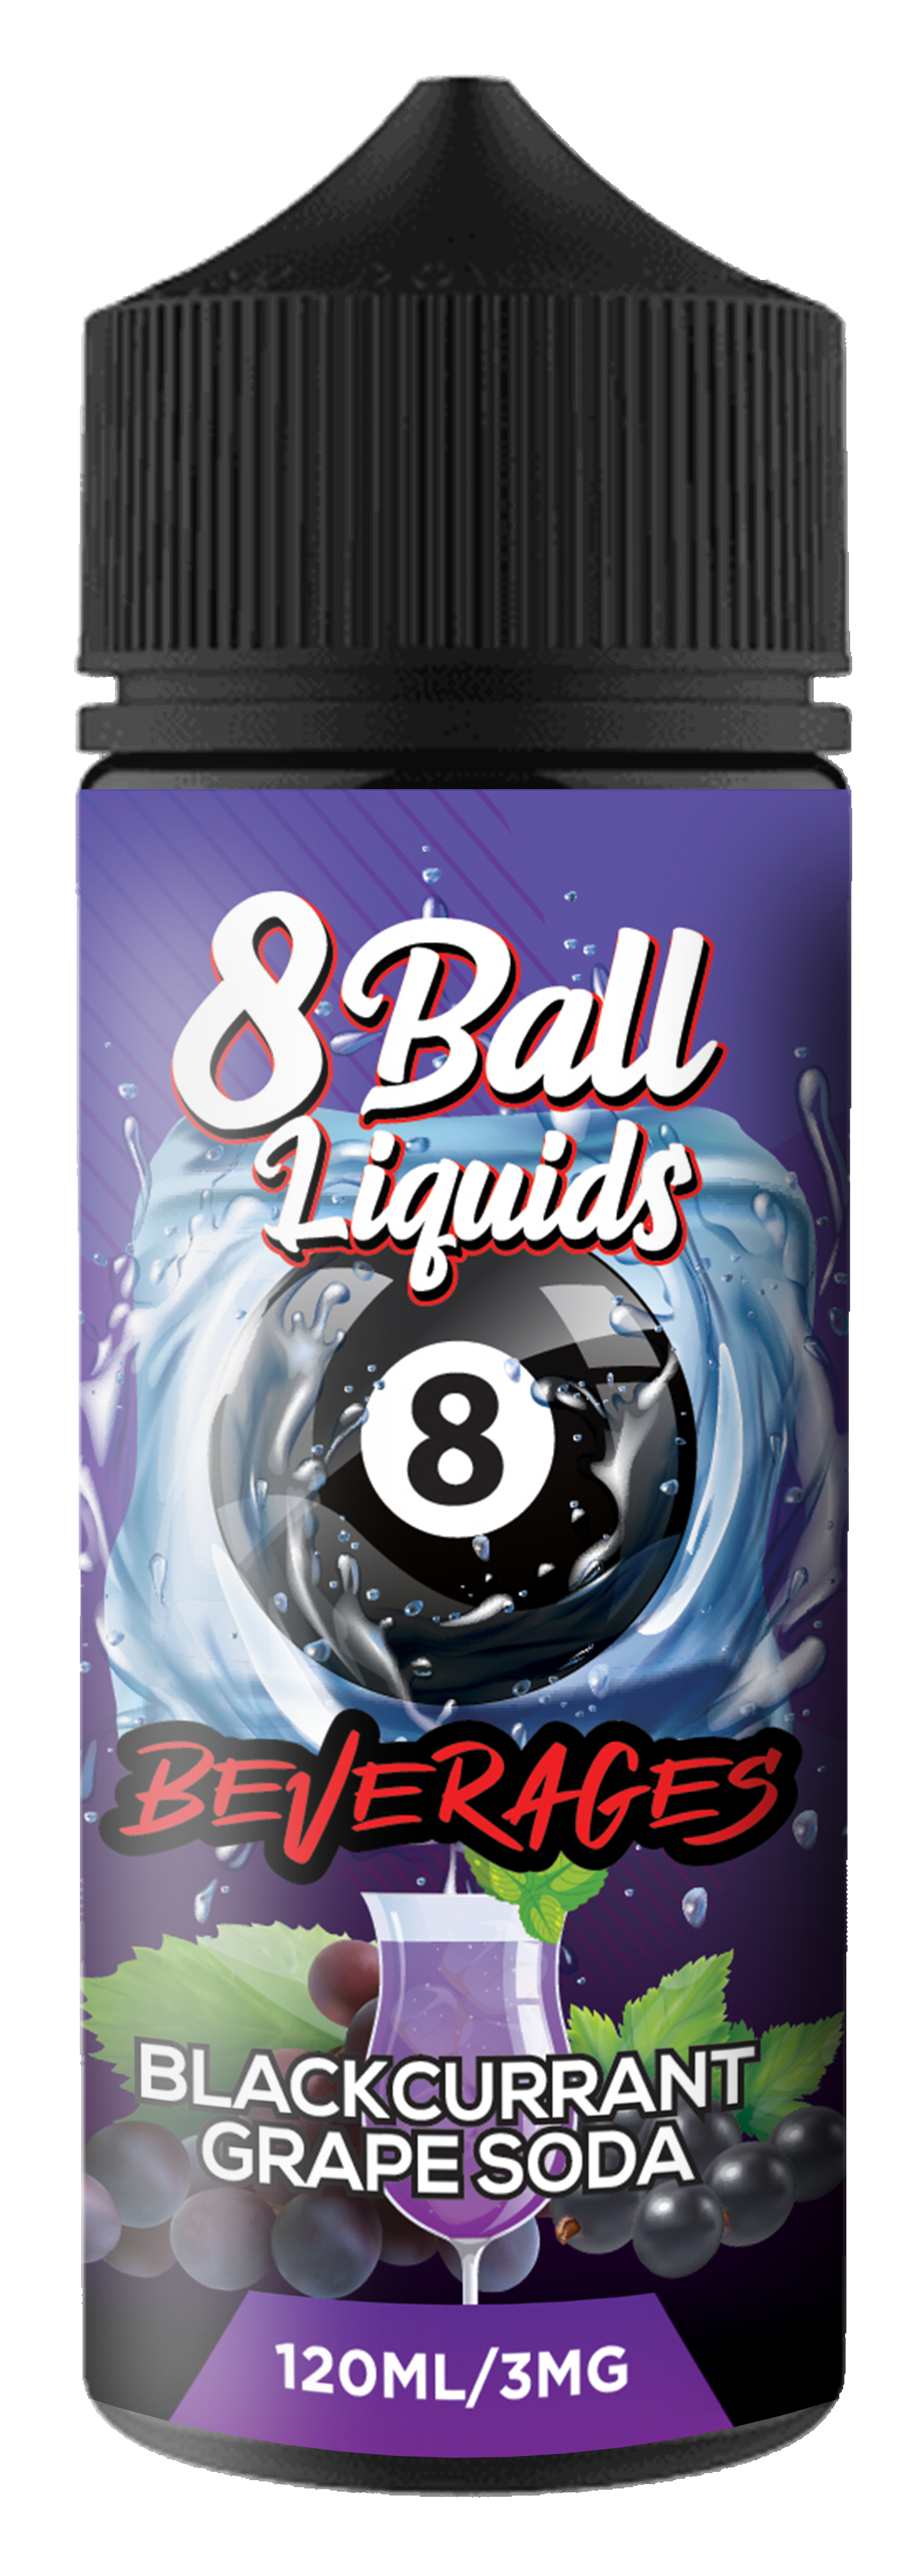 Beverages | Blackcurrant Grape Soda by 8 Ball Liquids 120ml